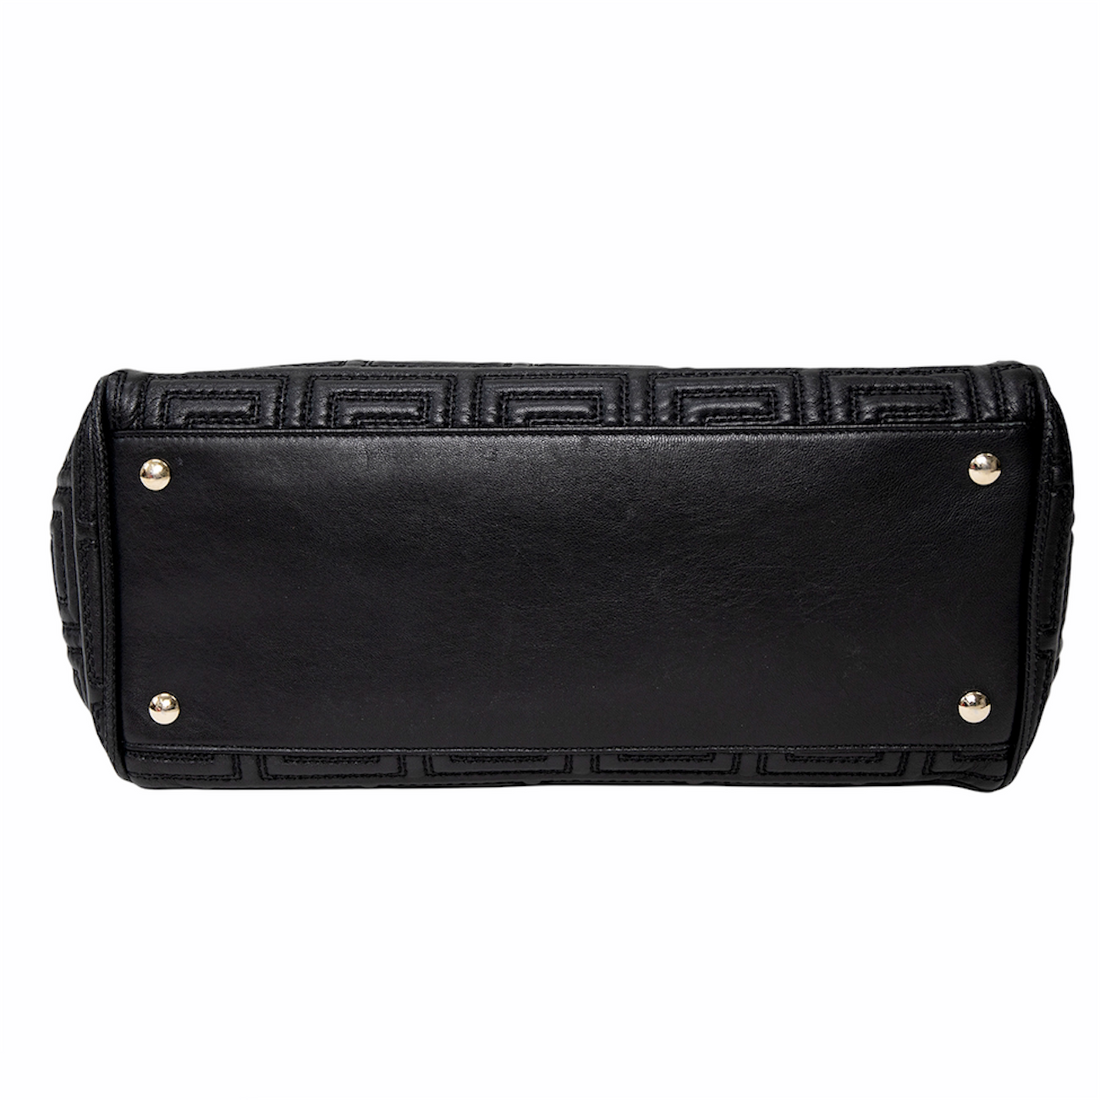 Versace handbag